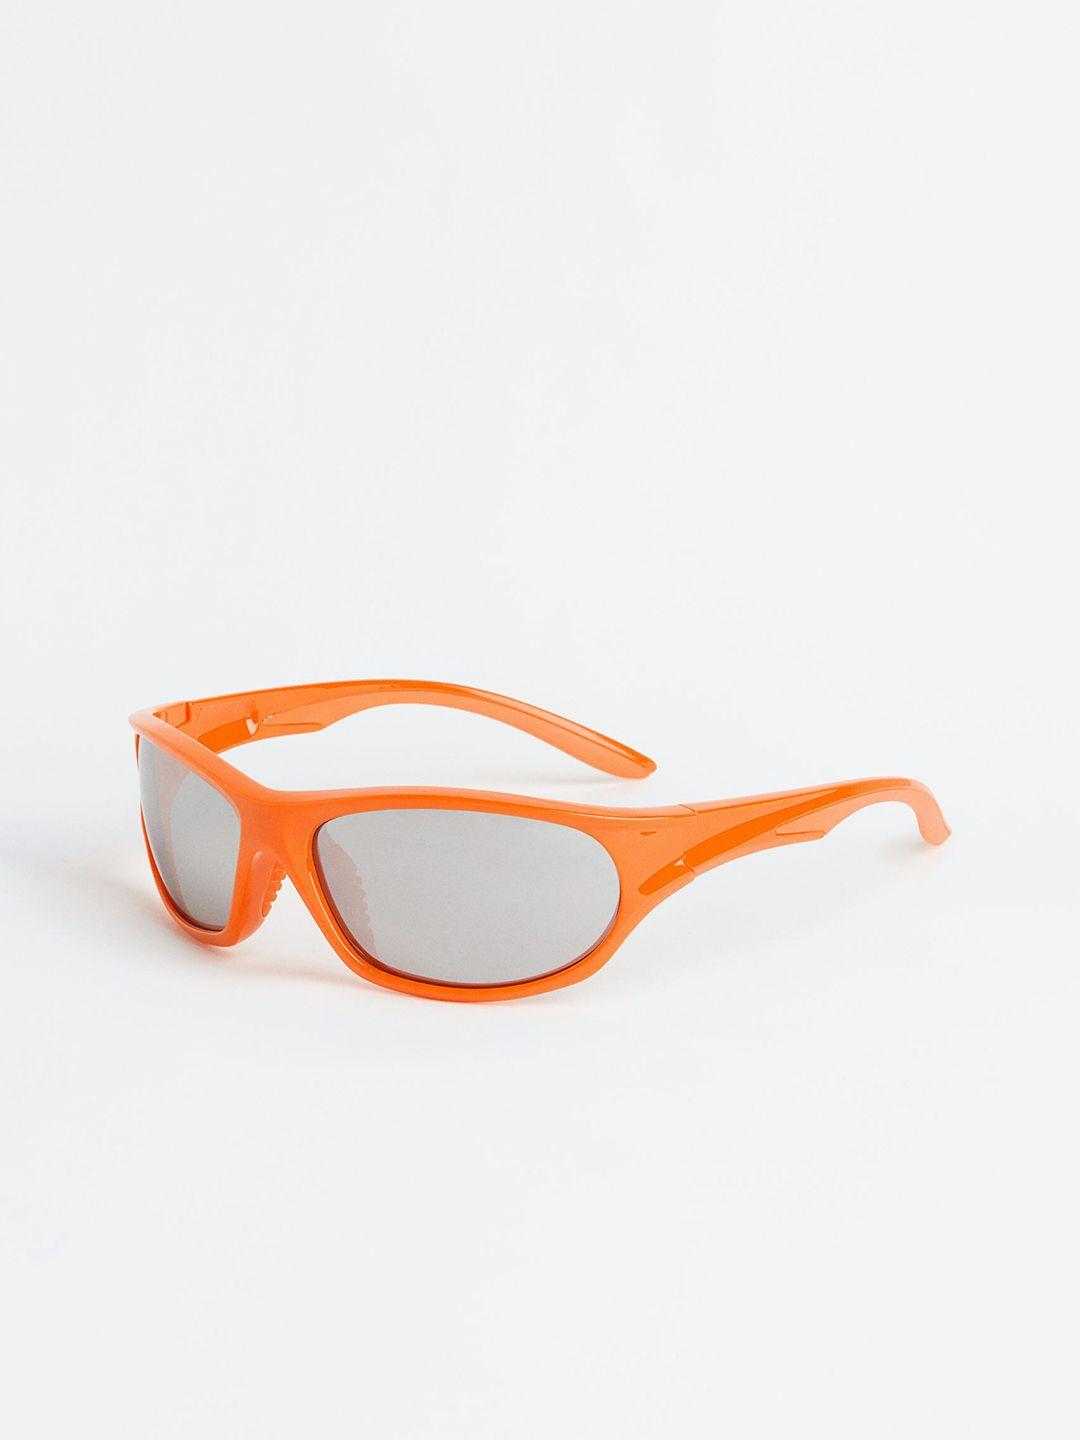 h&m-women-sunglasses-1155398001